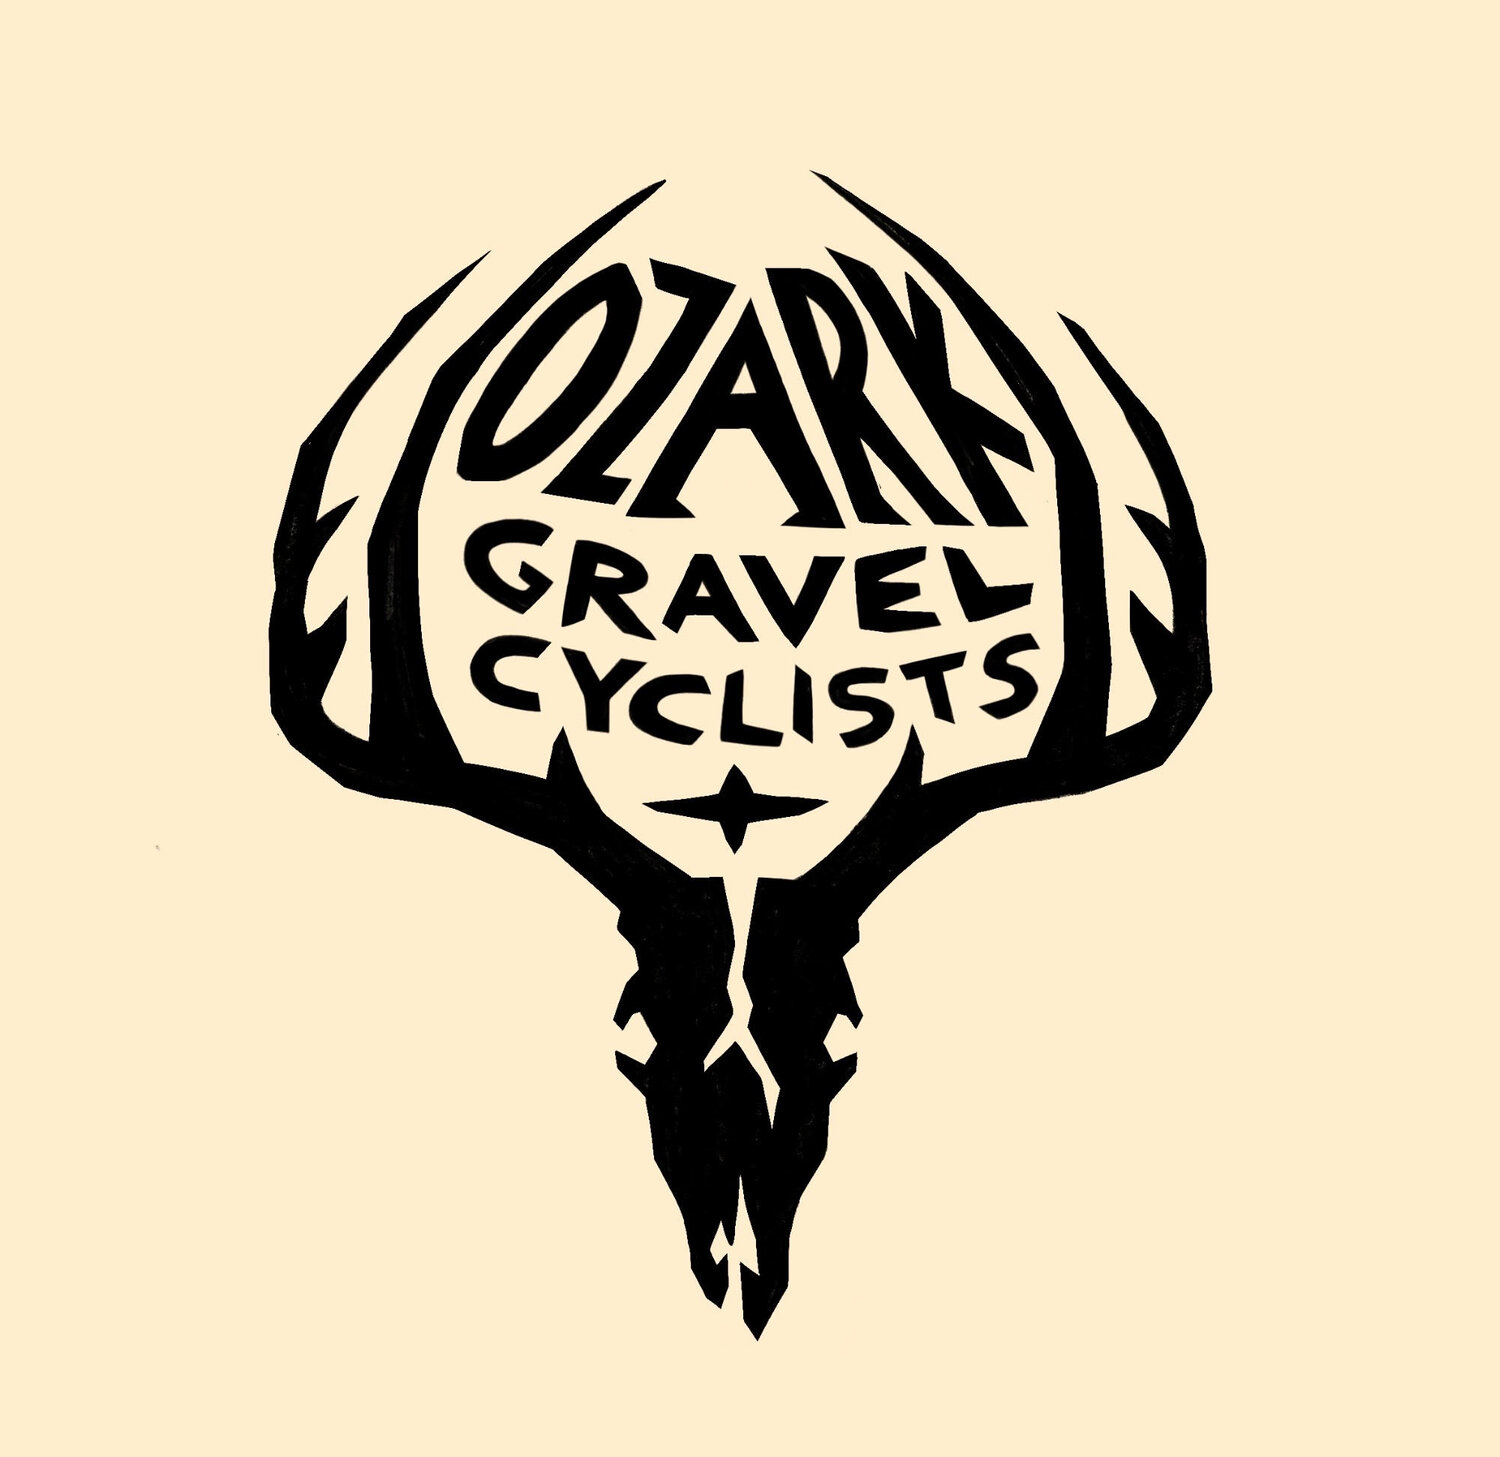 Ozark Gravel Cyclists